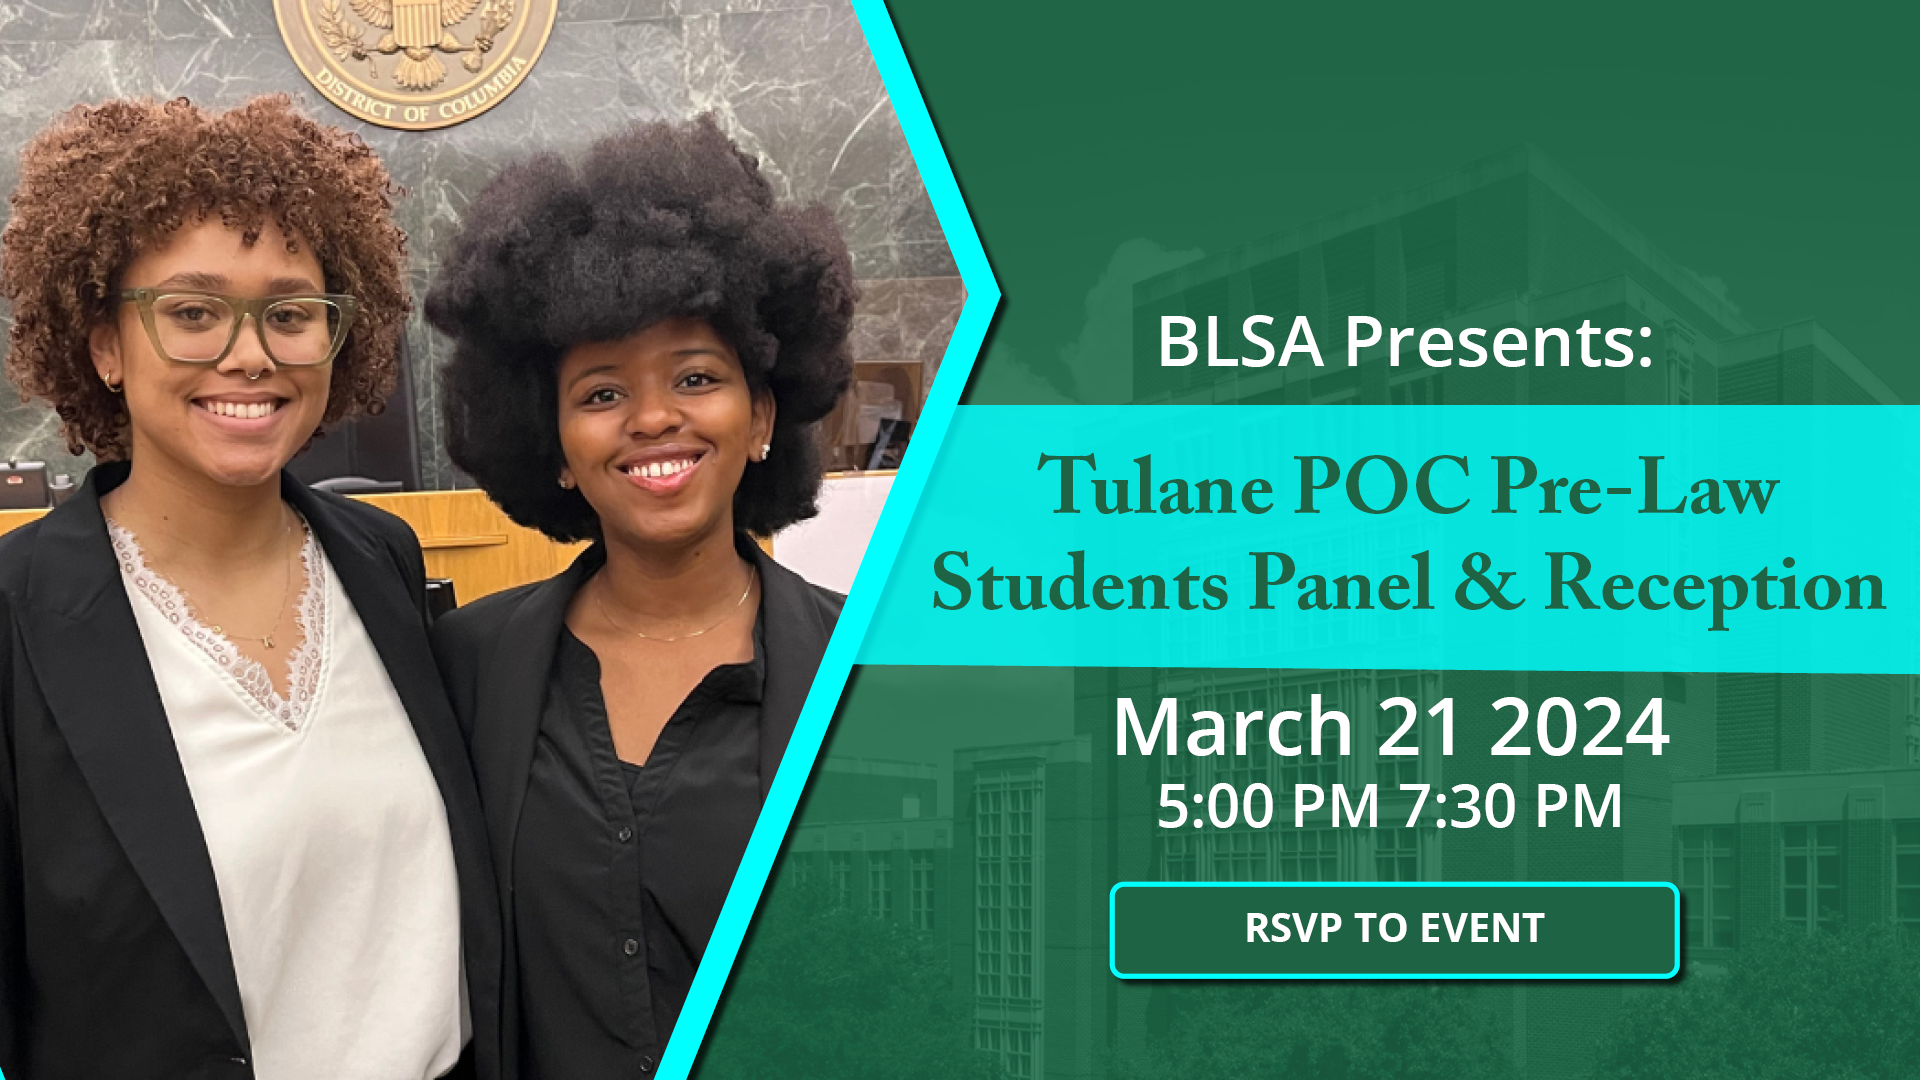 BLSA Presents: Tulane POC Pre-Law Students Panel & Reception